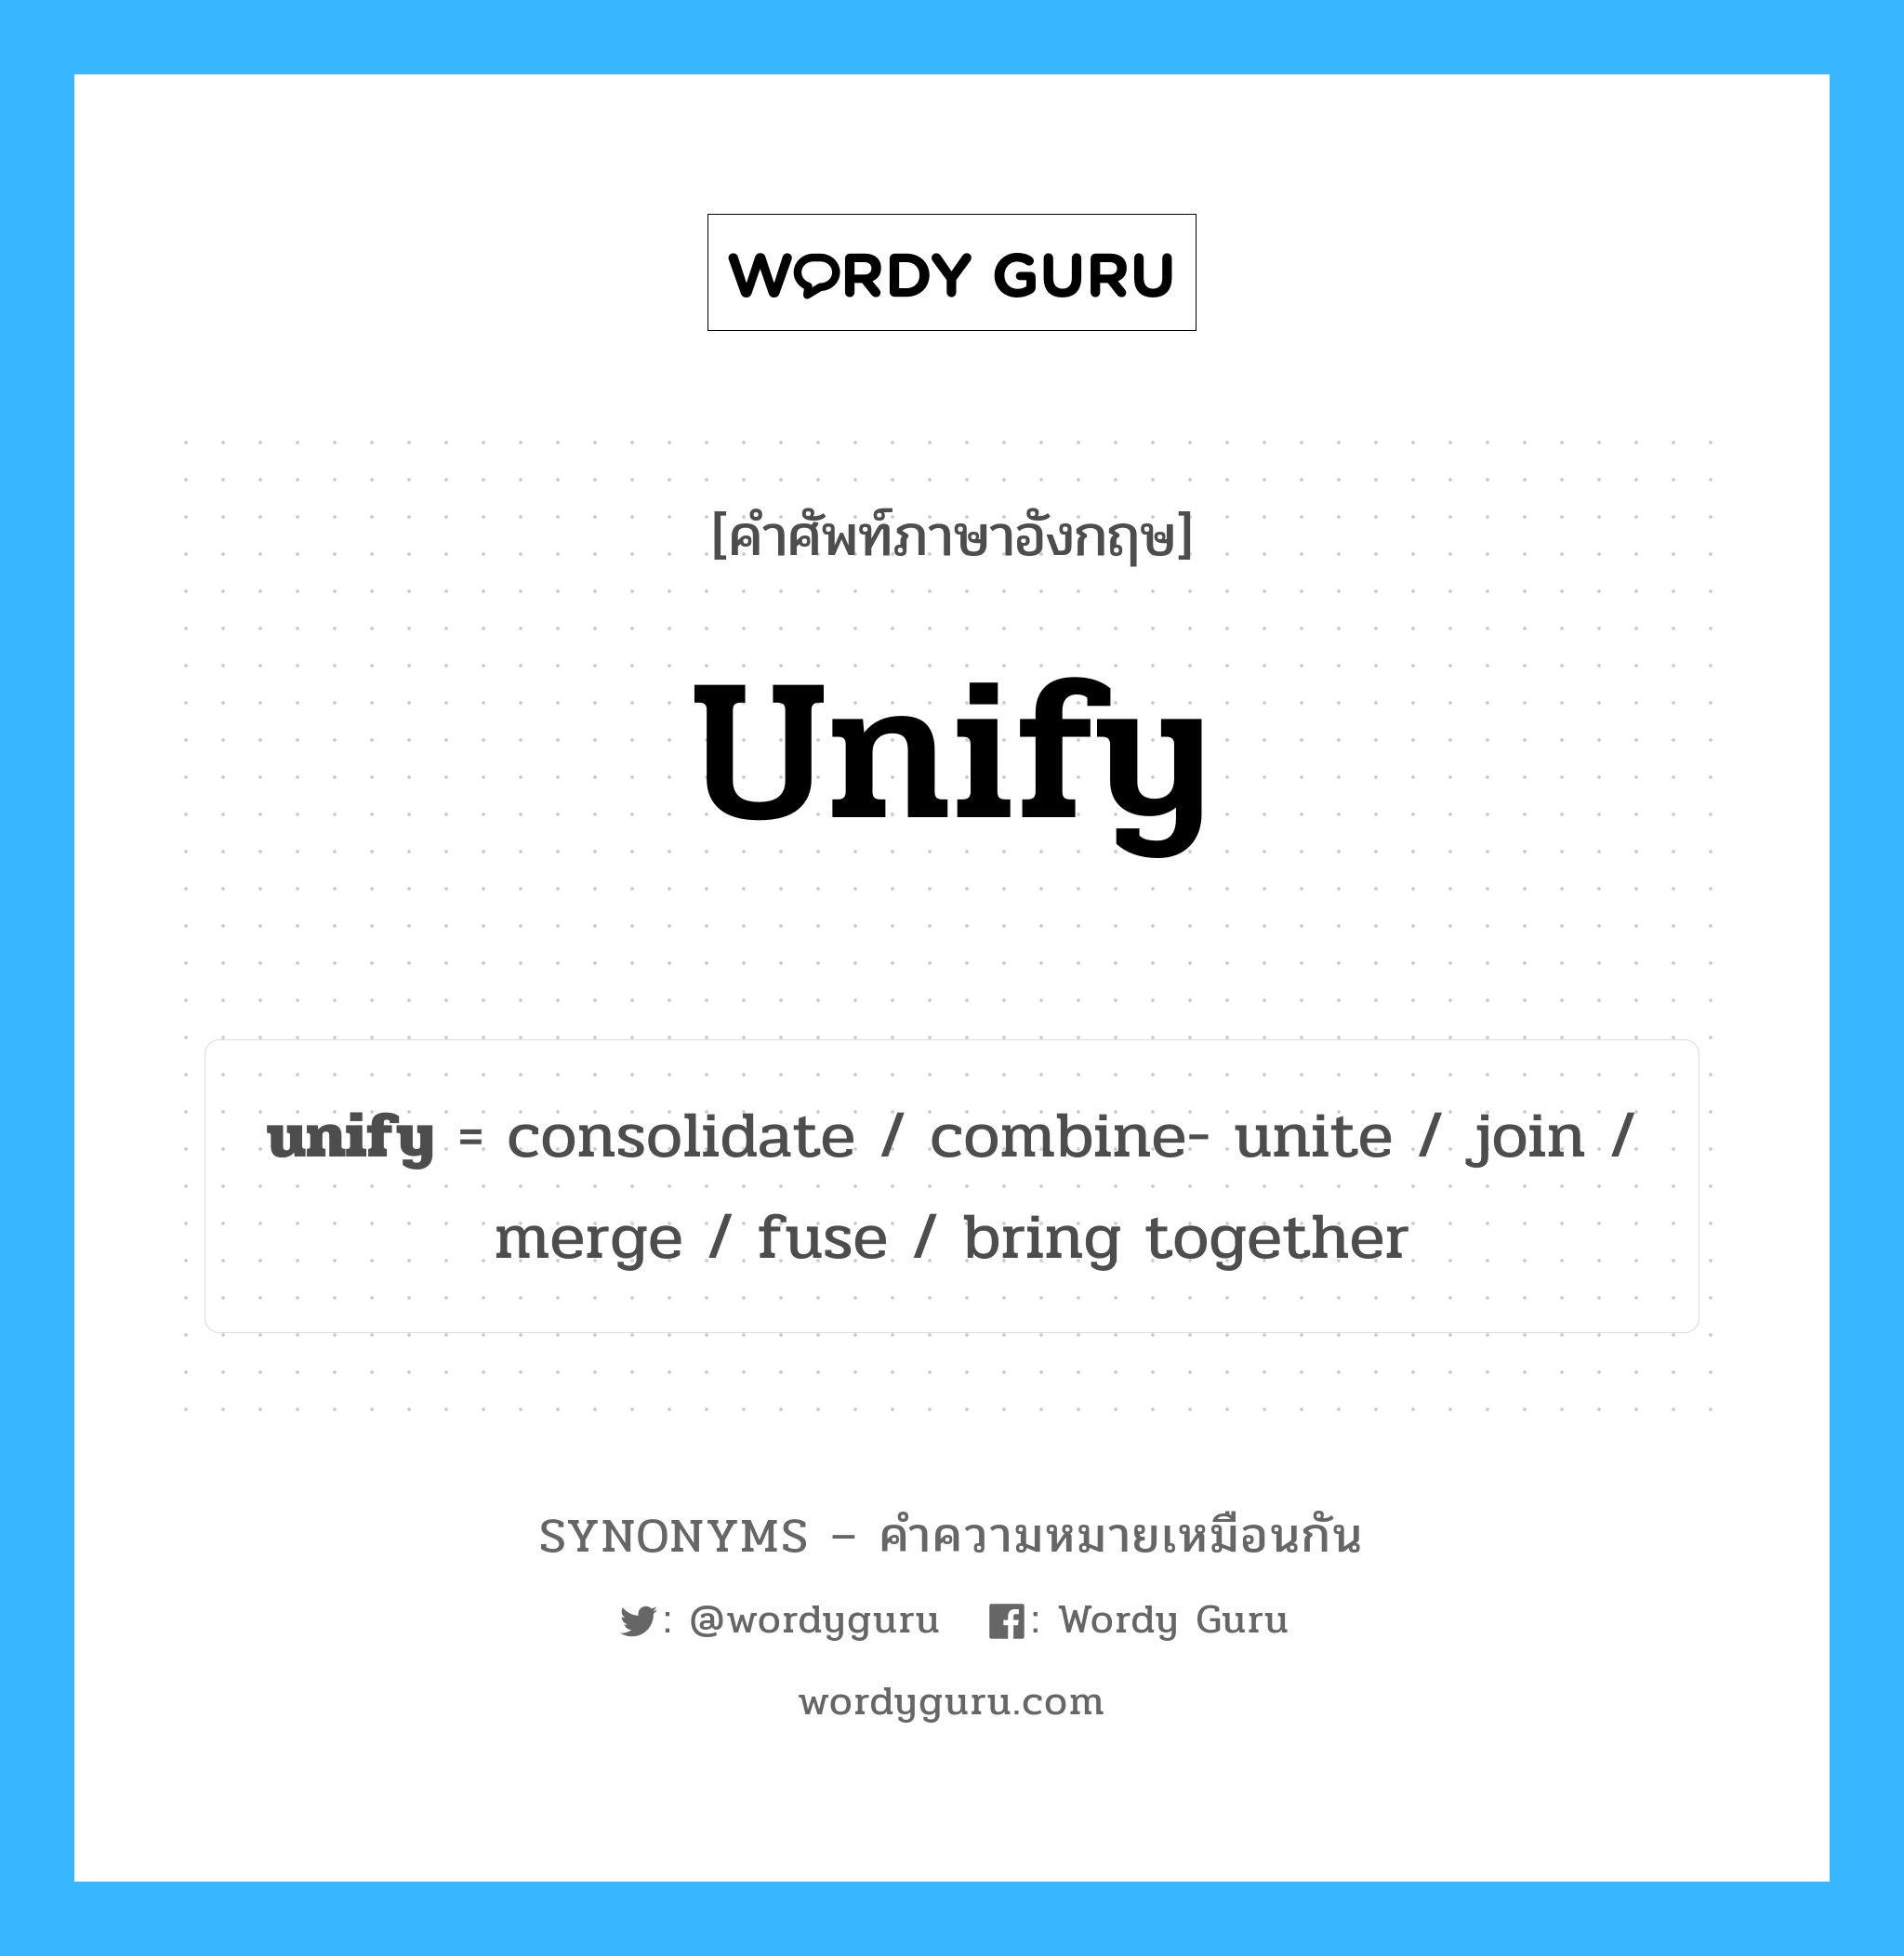 unify เป็นหนึ่งใน bring together และมีคำอื่น ๆ อีกดังนี้, คำศัพท์ภาษาอังกฤษ unify ความหมายคล้ายกันกับ bring together แปลว่า นำมารวมกัน หมวด bring together